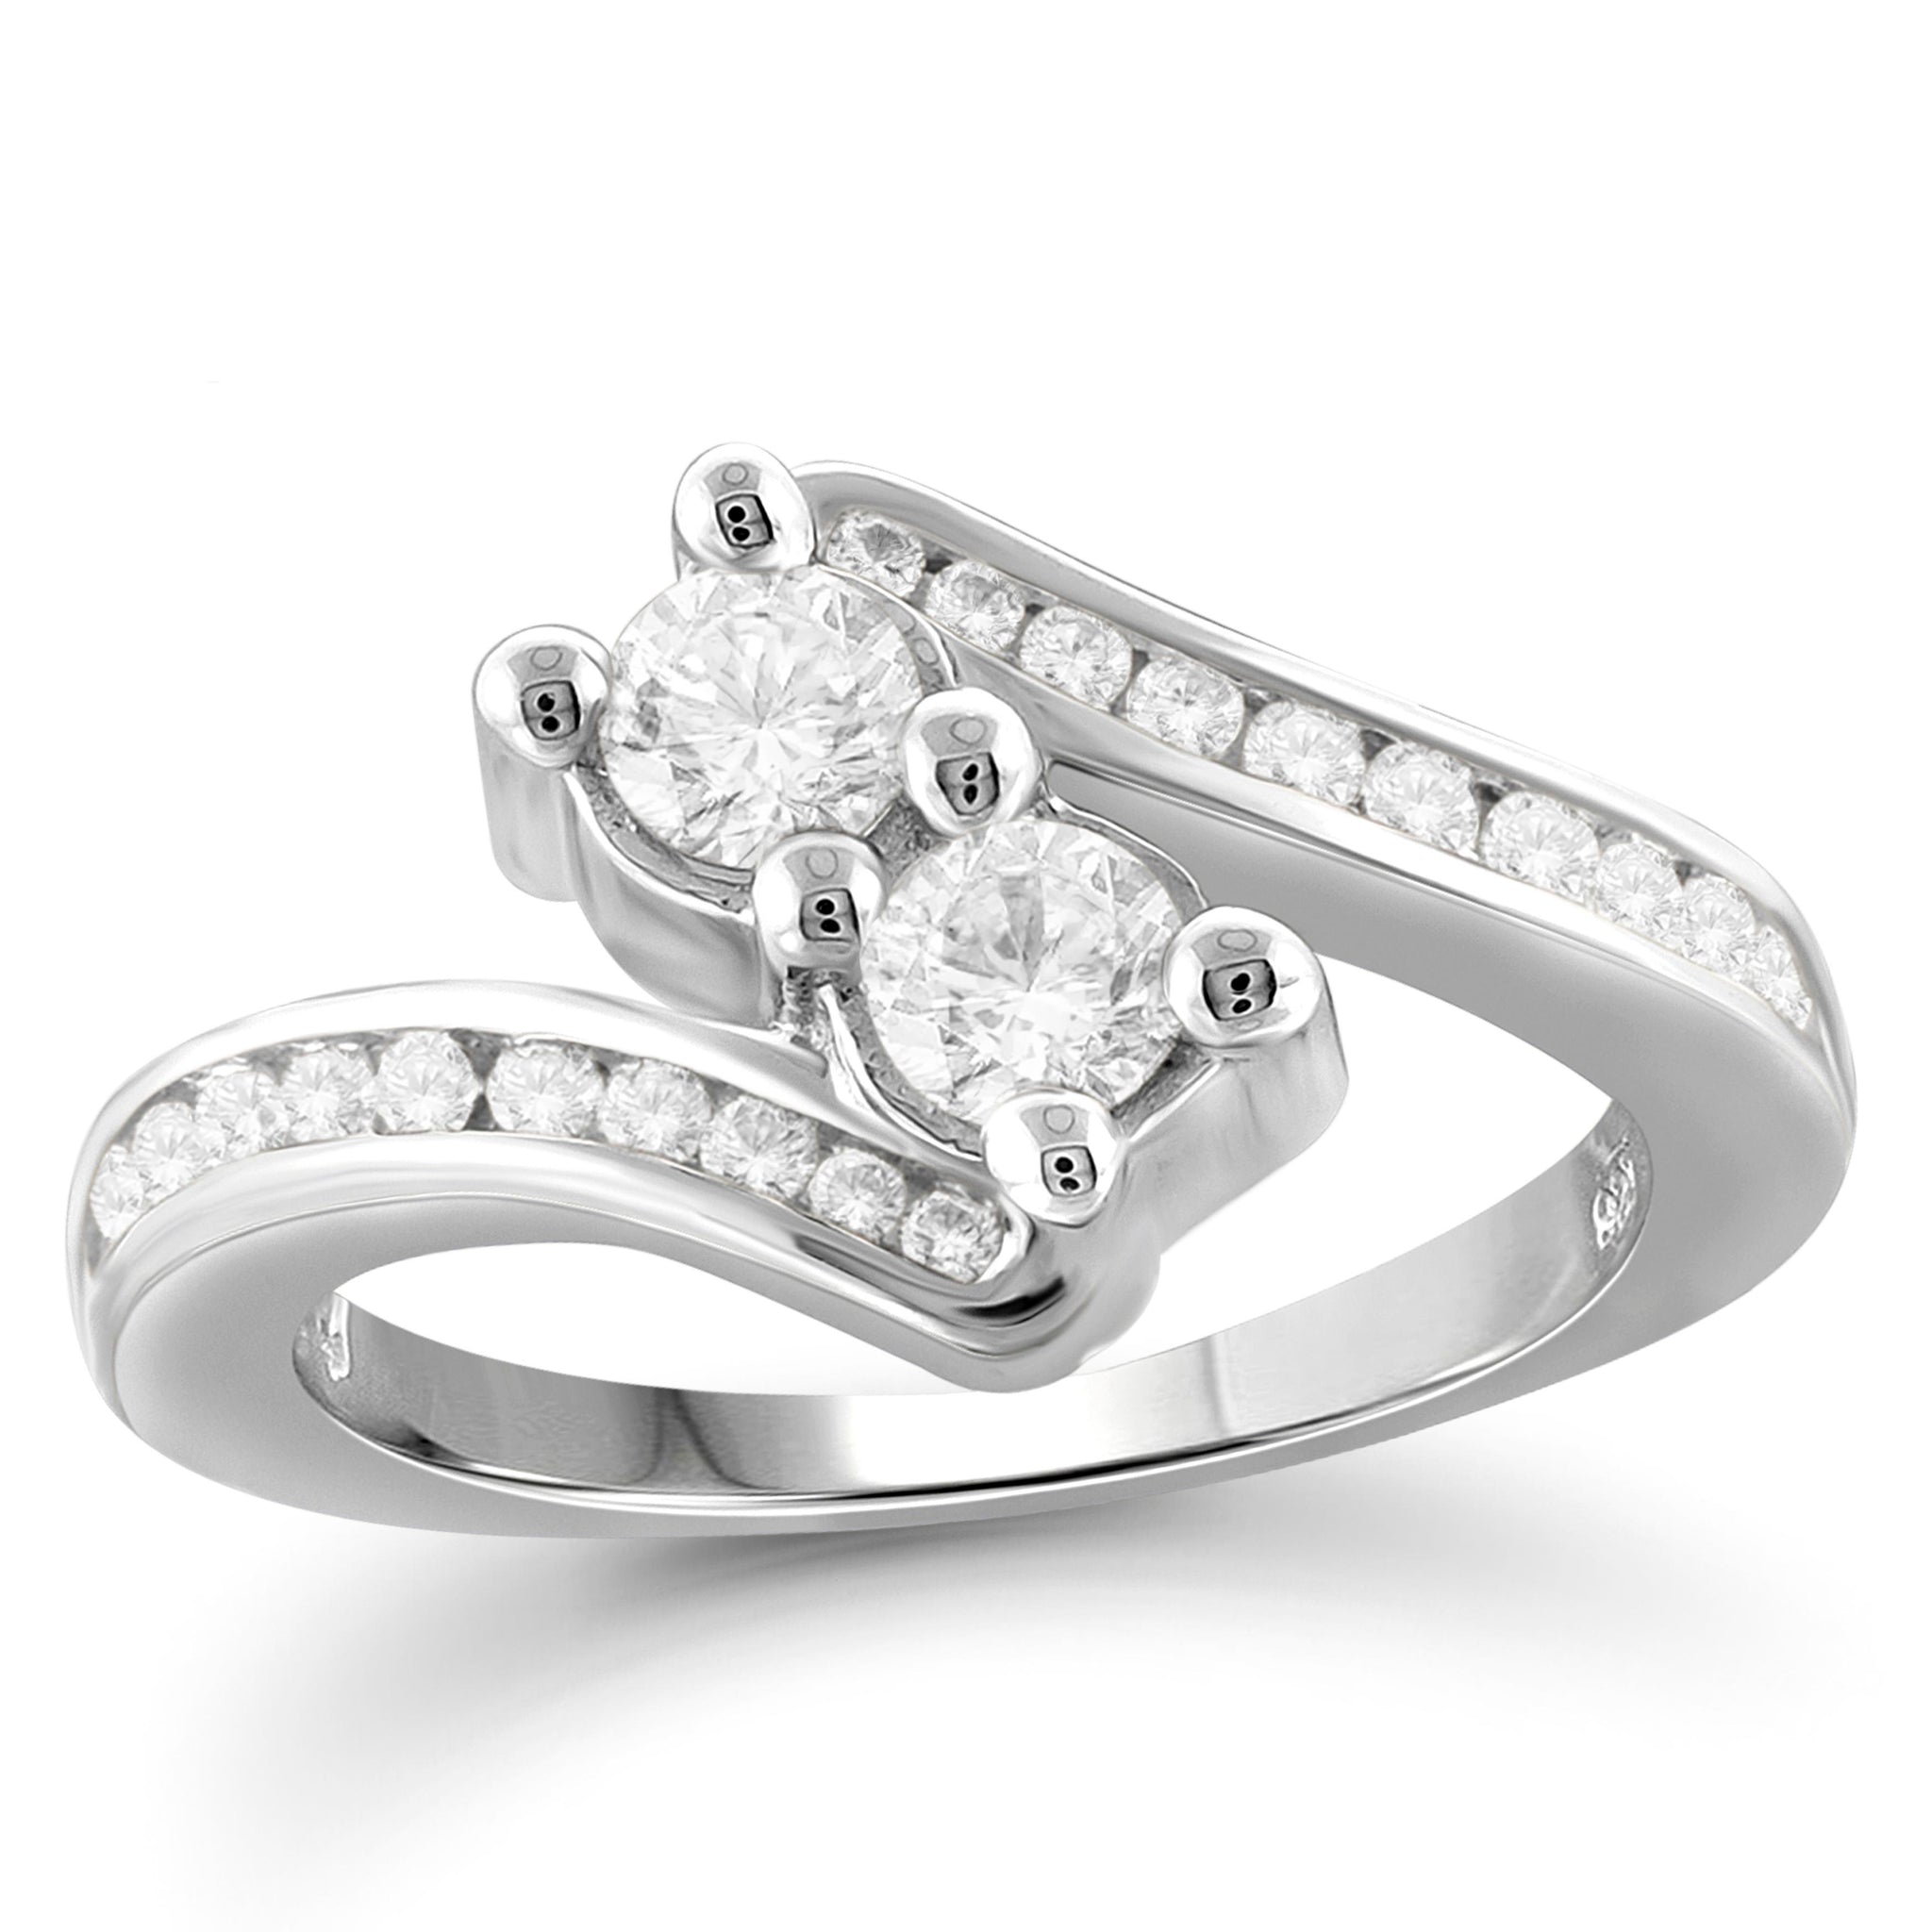 Jewelnova 1 1/4 Carat T.W. White Diamond 10K White Gold Two Stone Engagement Ring - Assorted Colors